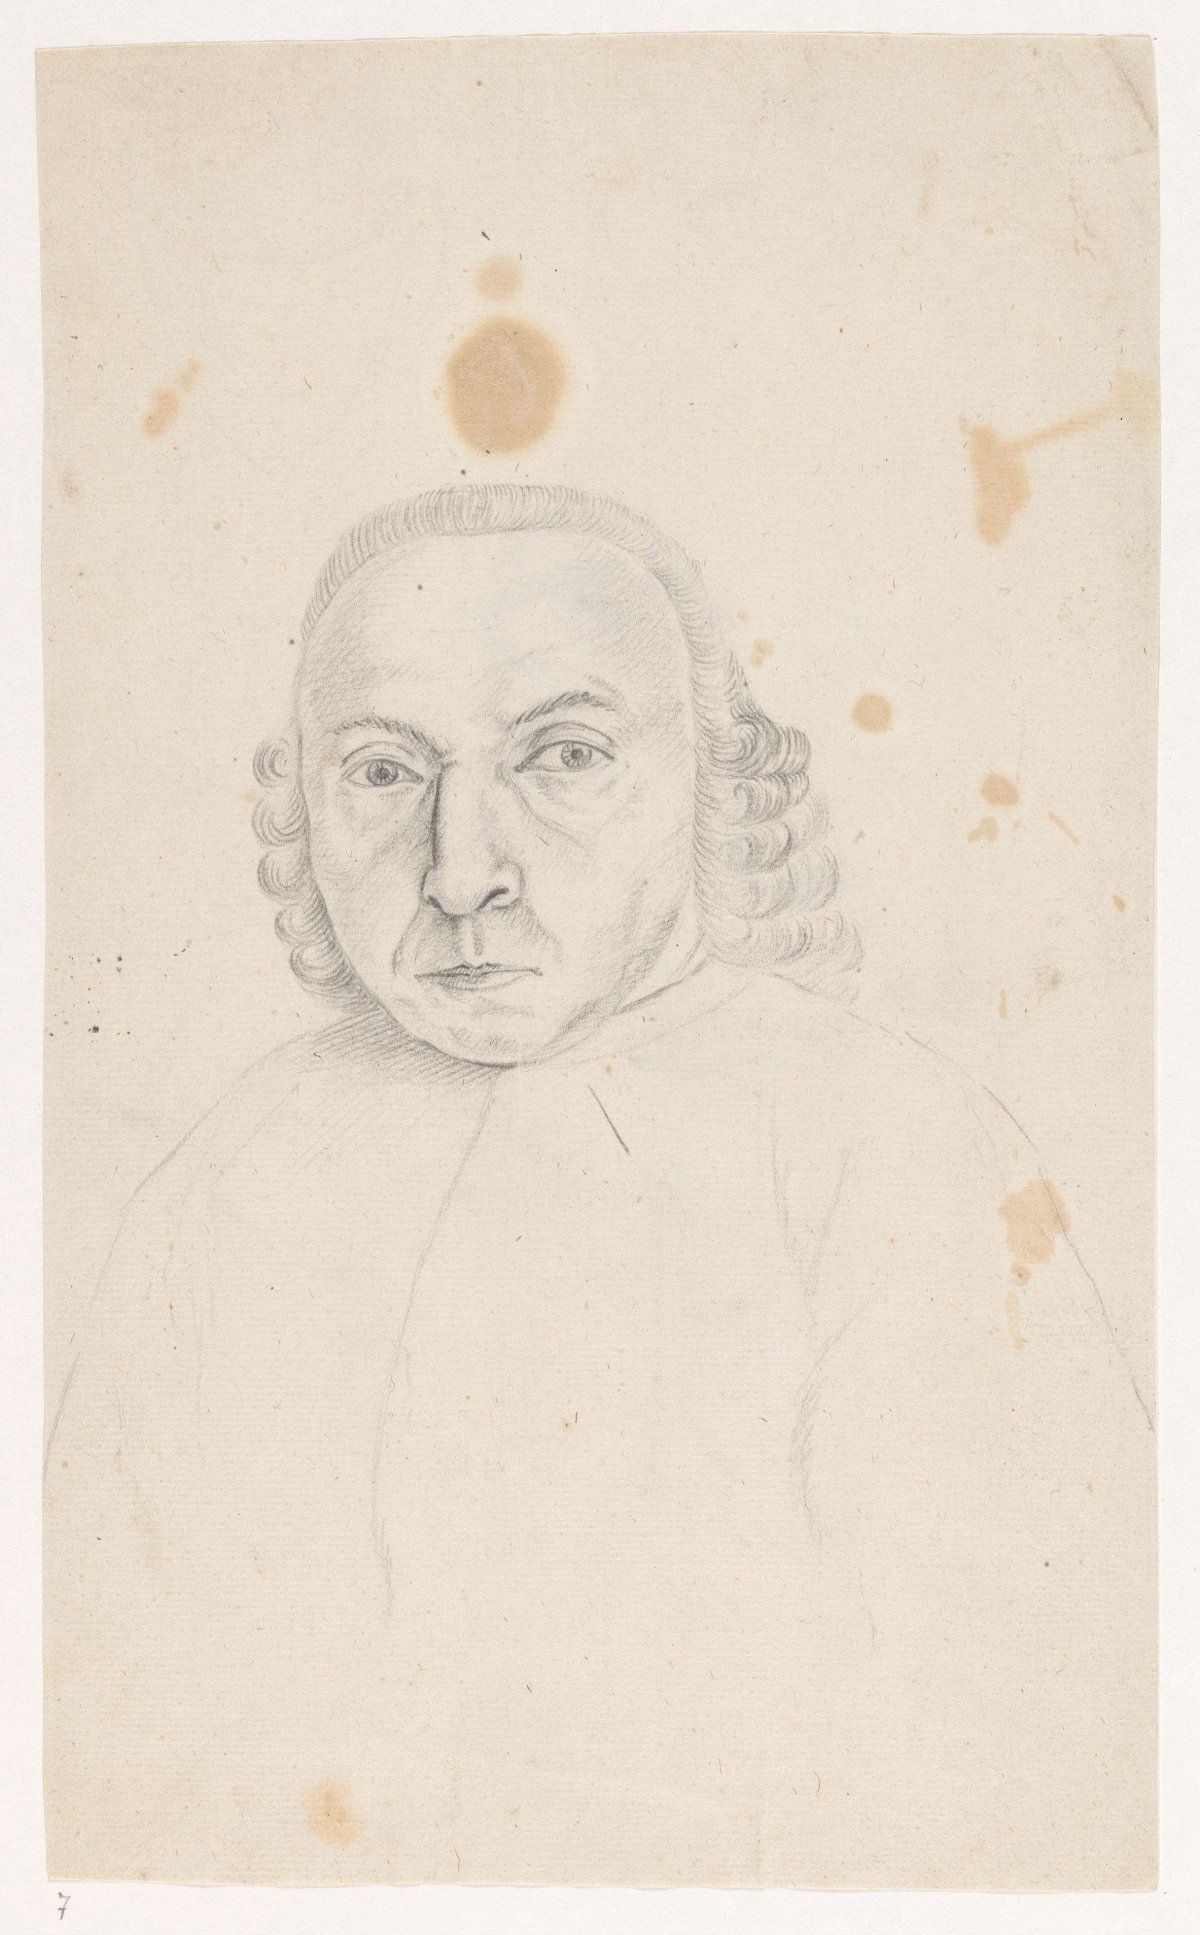 Portrait of a man, Jan Brandes, 1788 - 1808